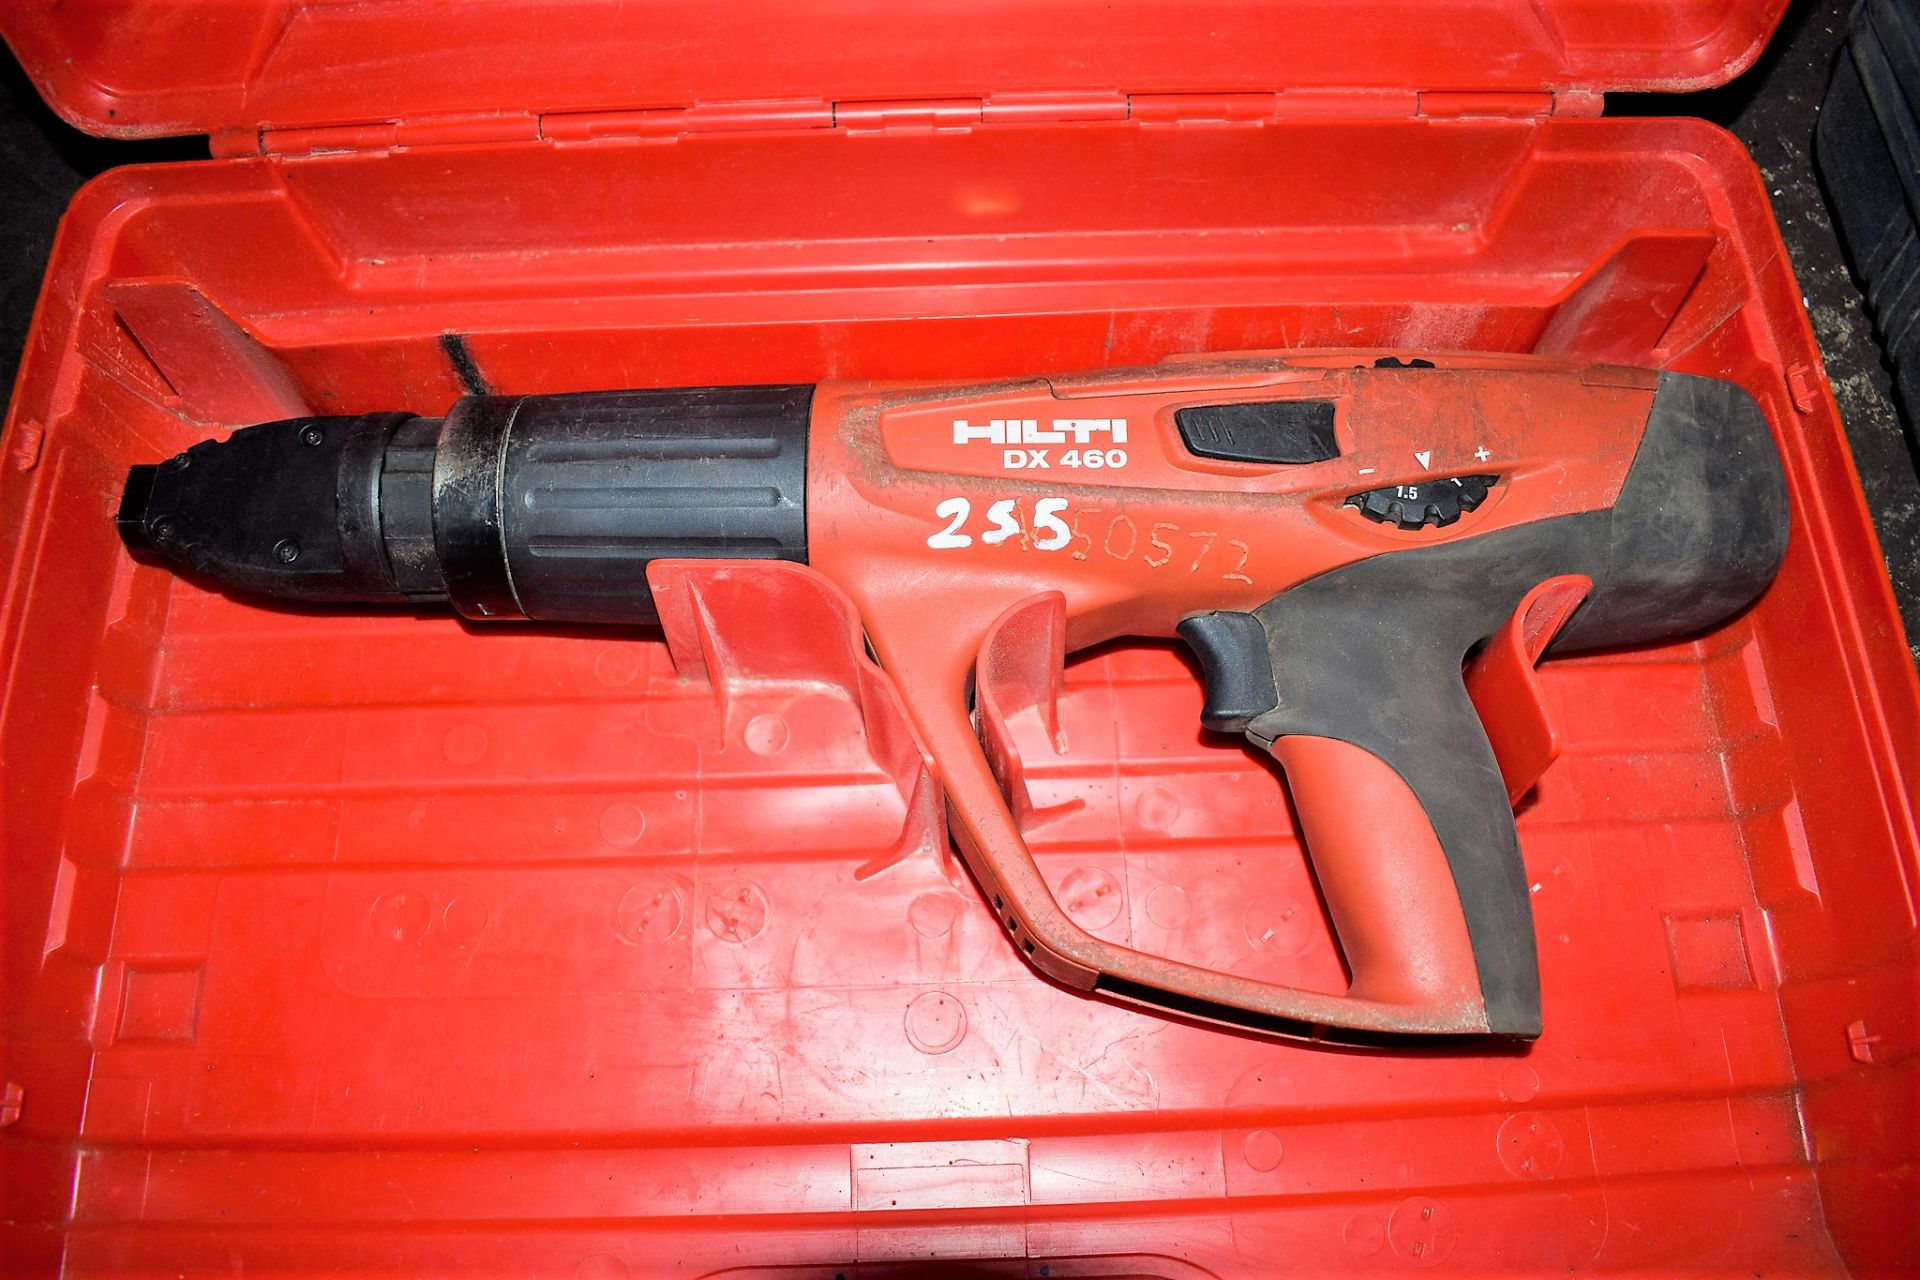 Hilti DX460 nail gun c/w carry case A650572